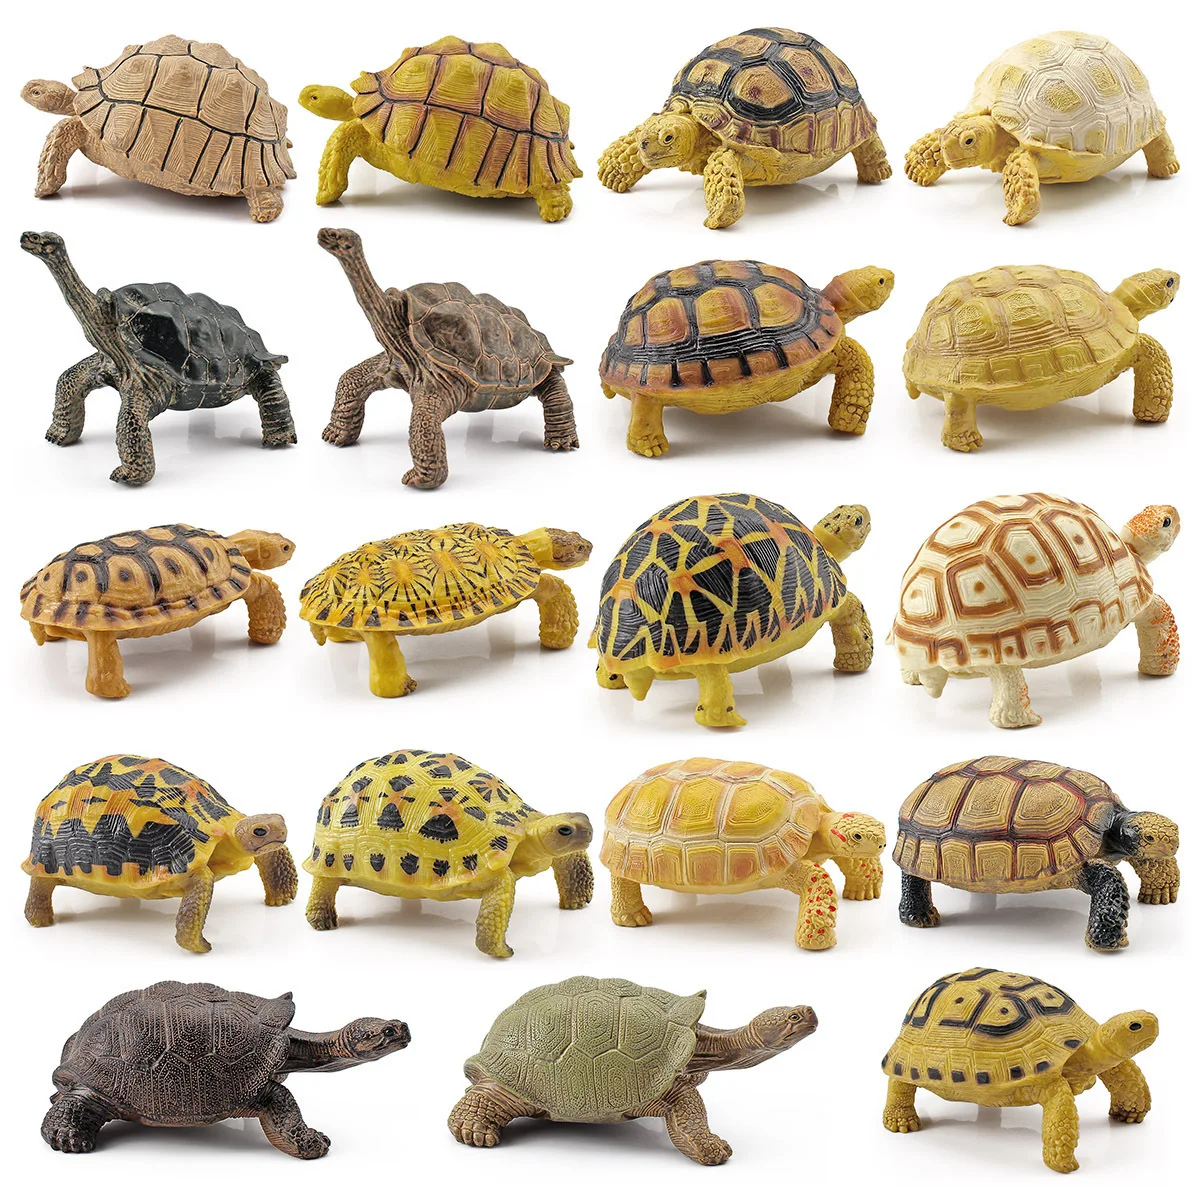 

Simulation Amphibian Reptile Model Tortoise Tortoise Star Tortoise Cognitive Static Ornament Toy